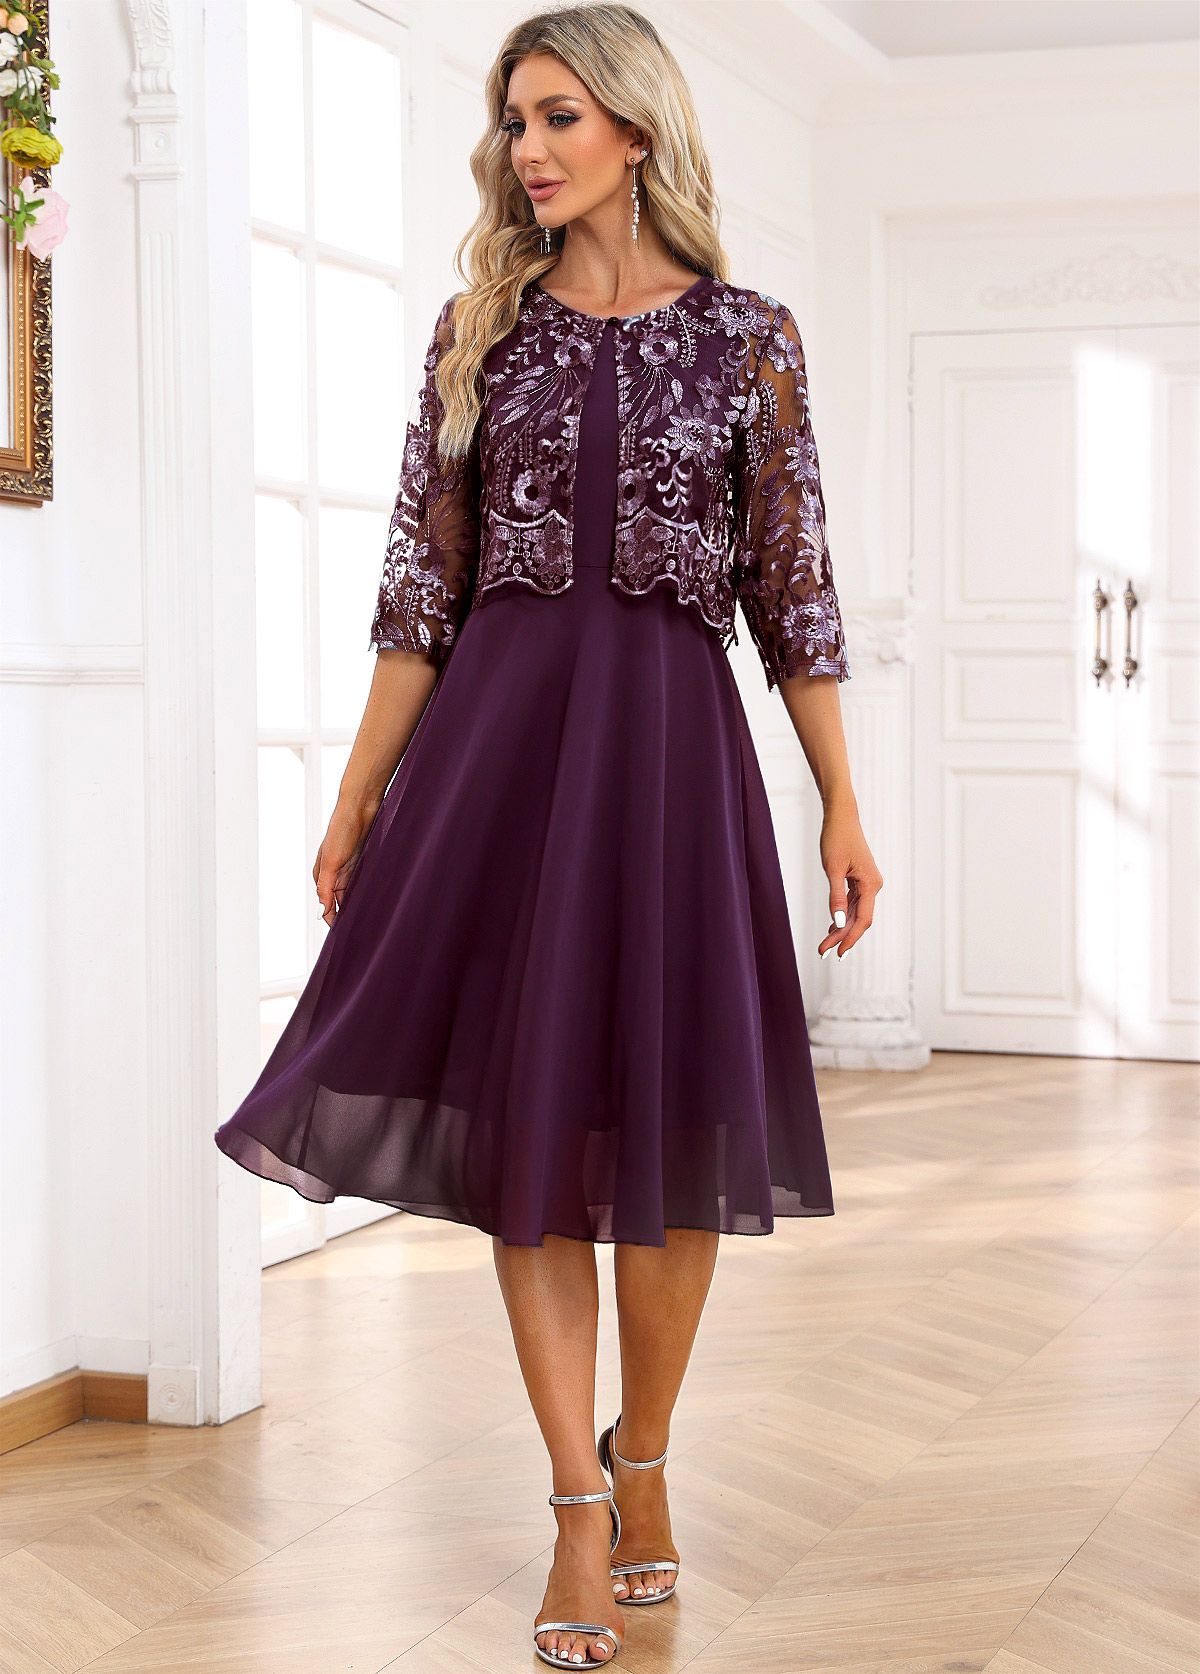 Lace A Line Scoop Neck Dark Purple Dress